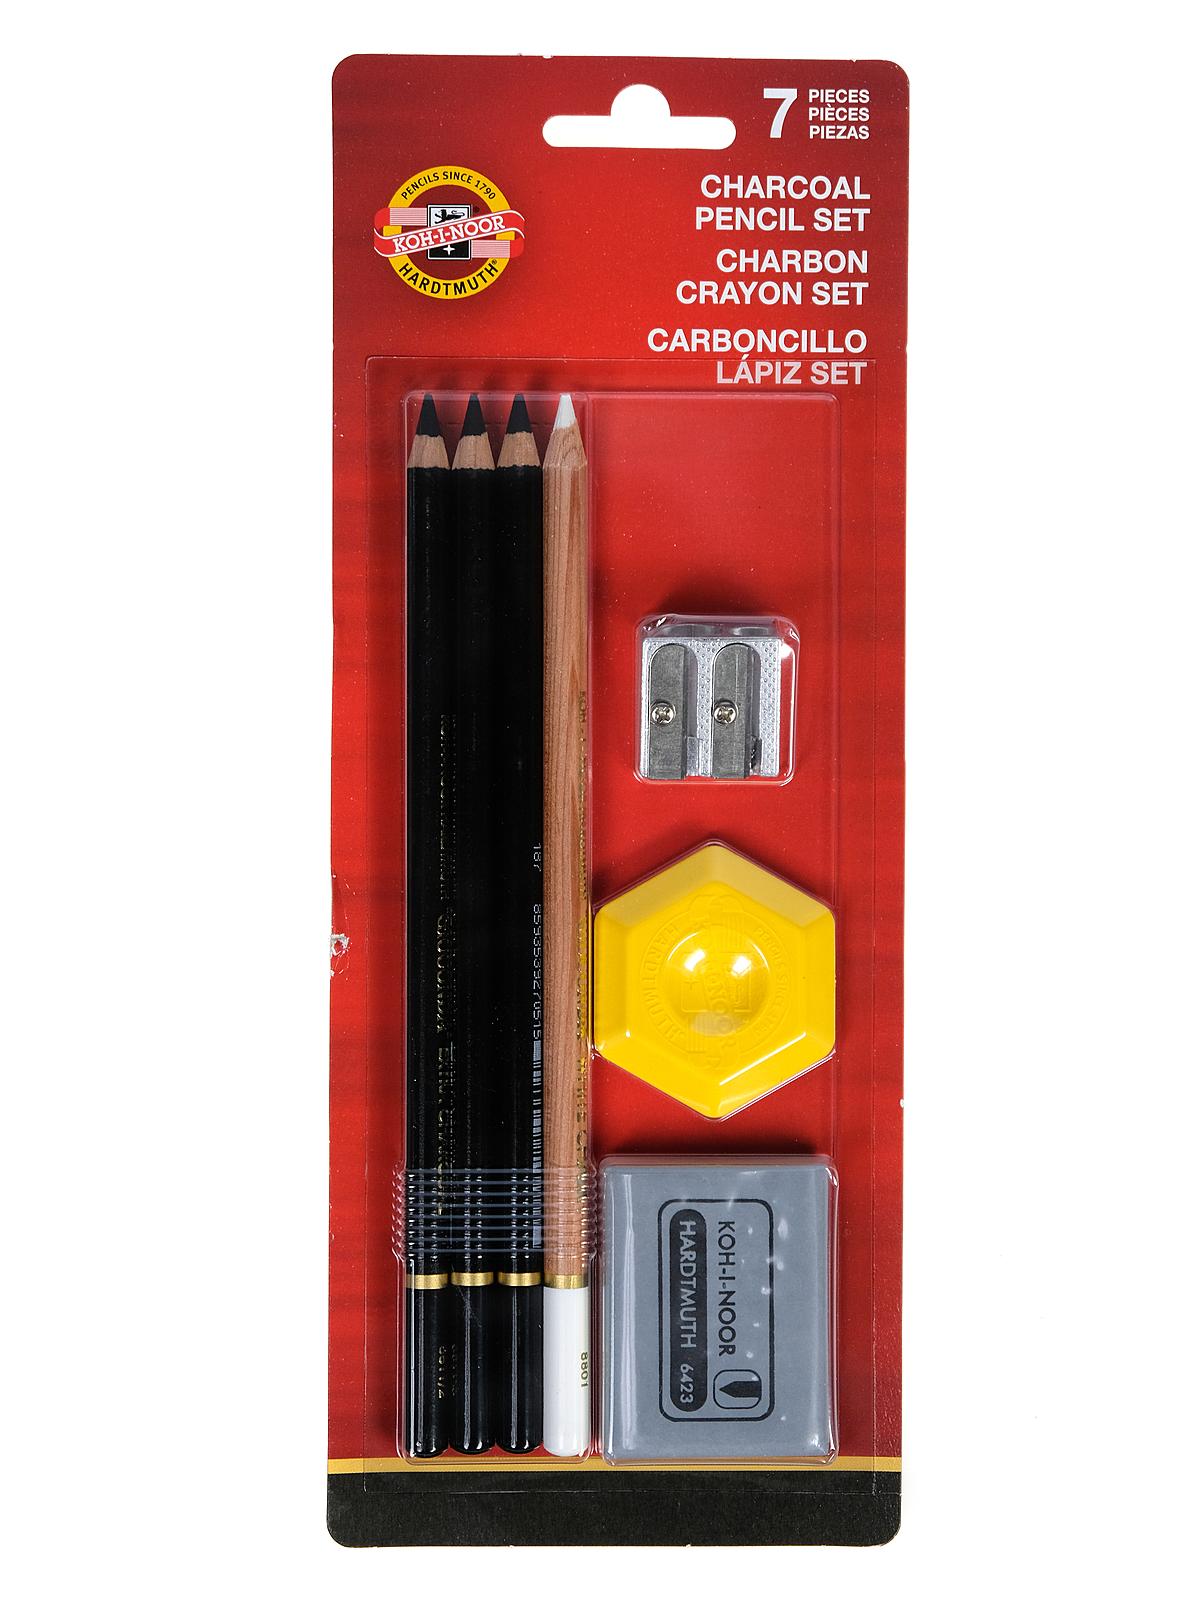 Charcoal Pencil Set Each